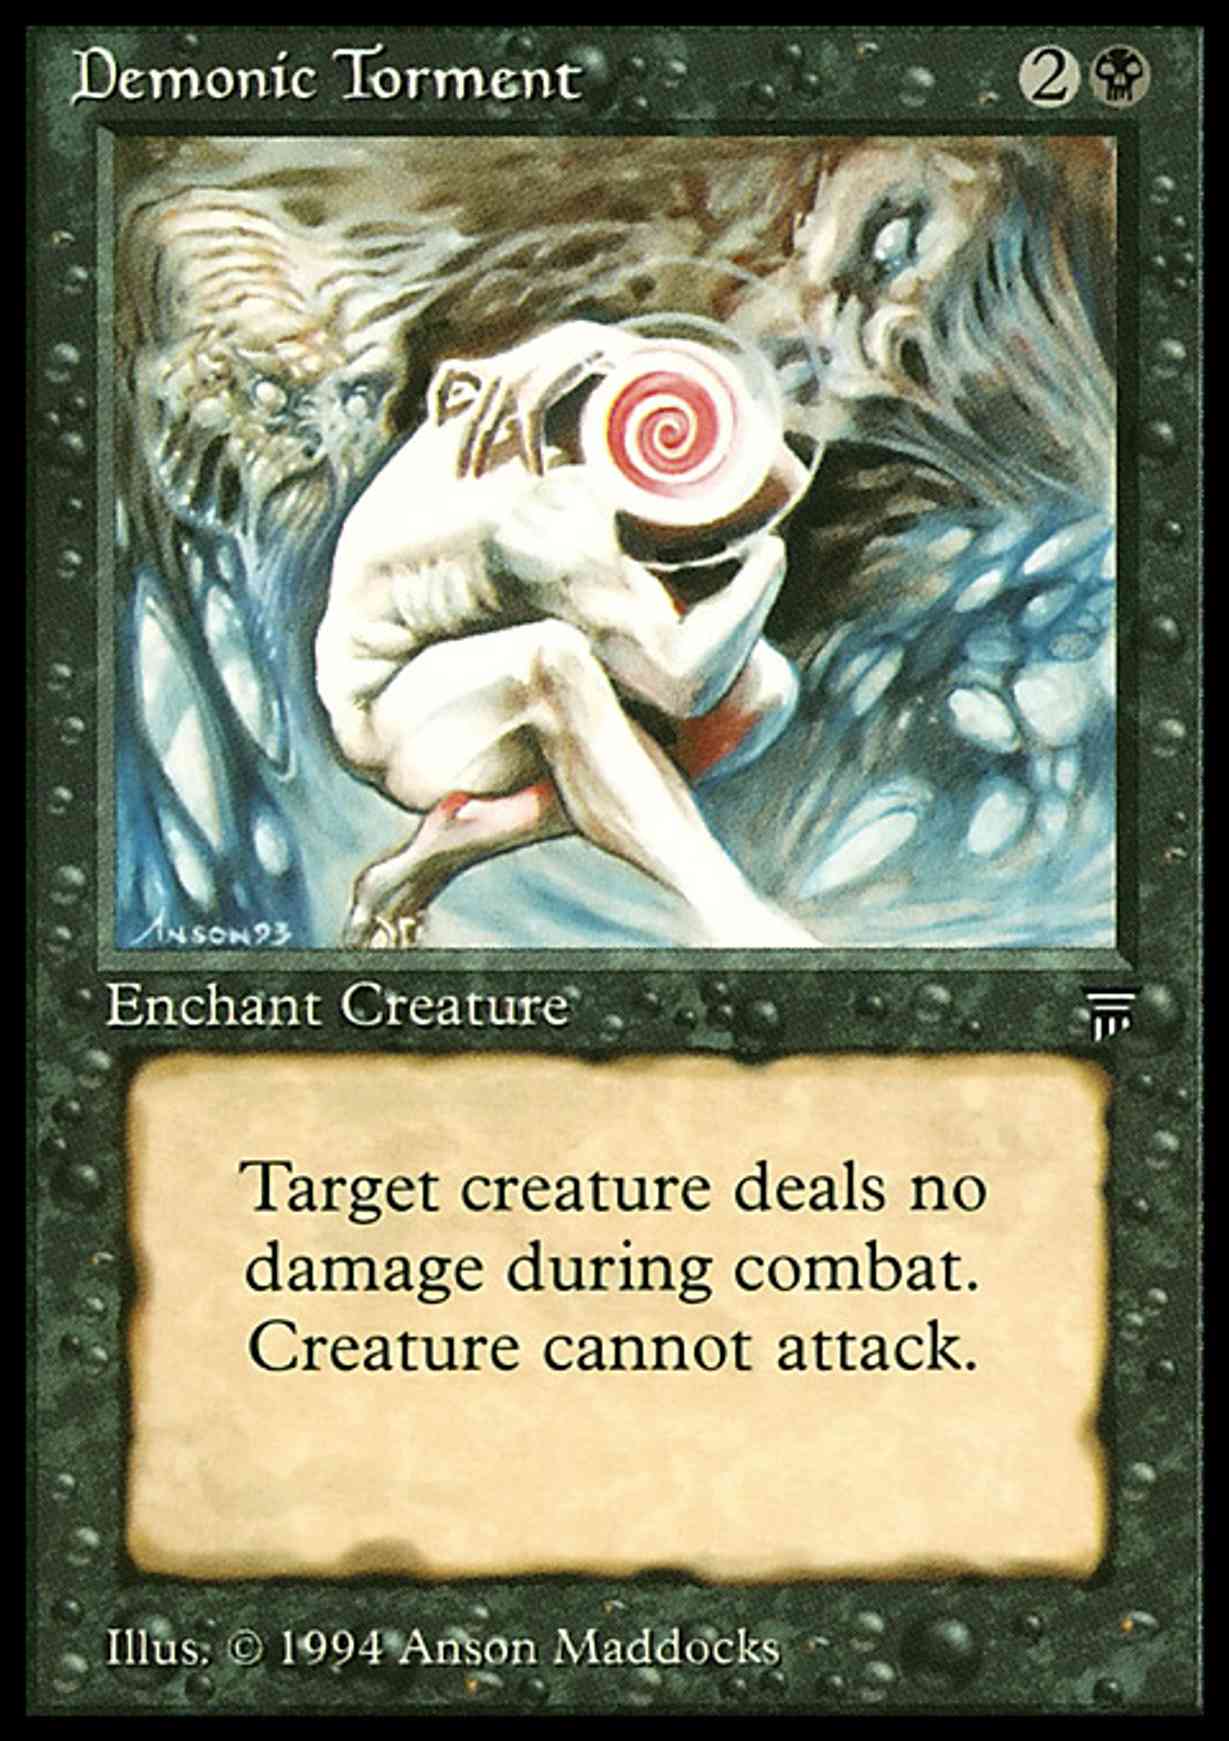 Demonic Torment magic card front